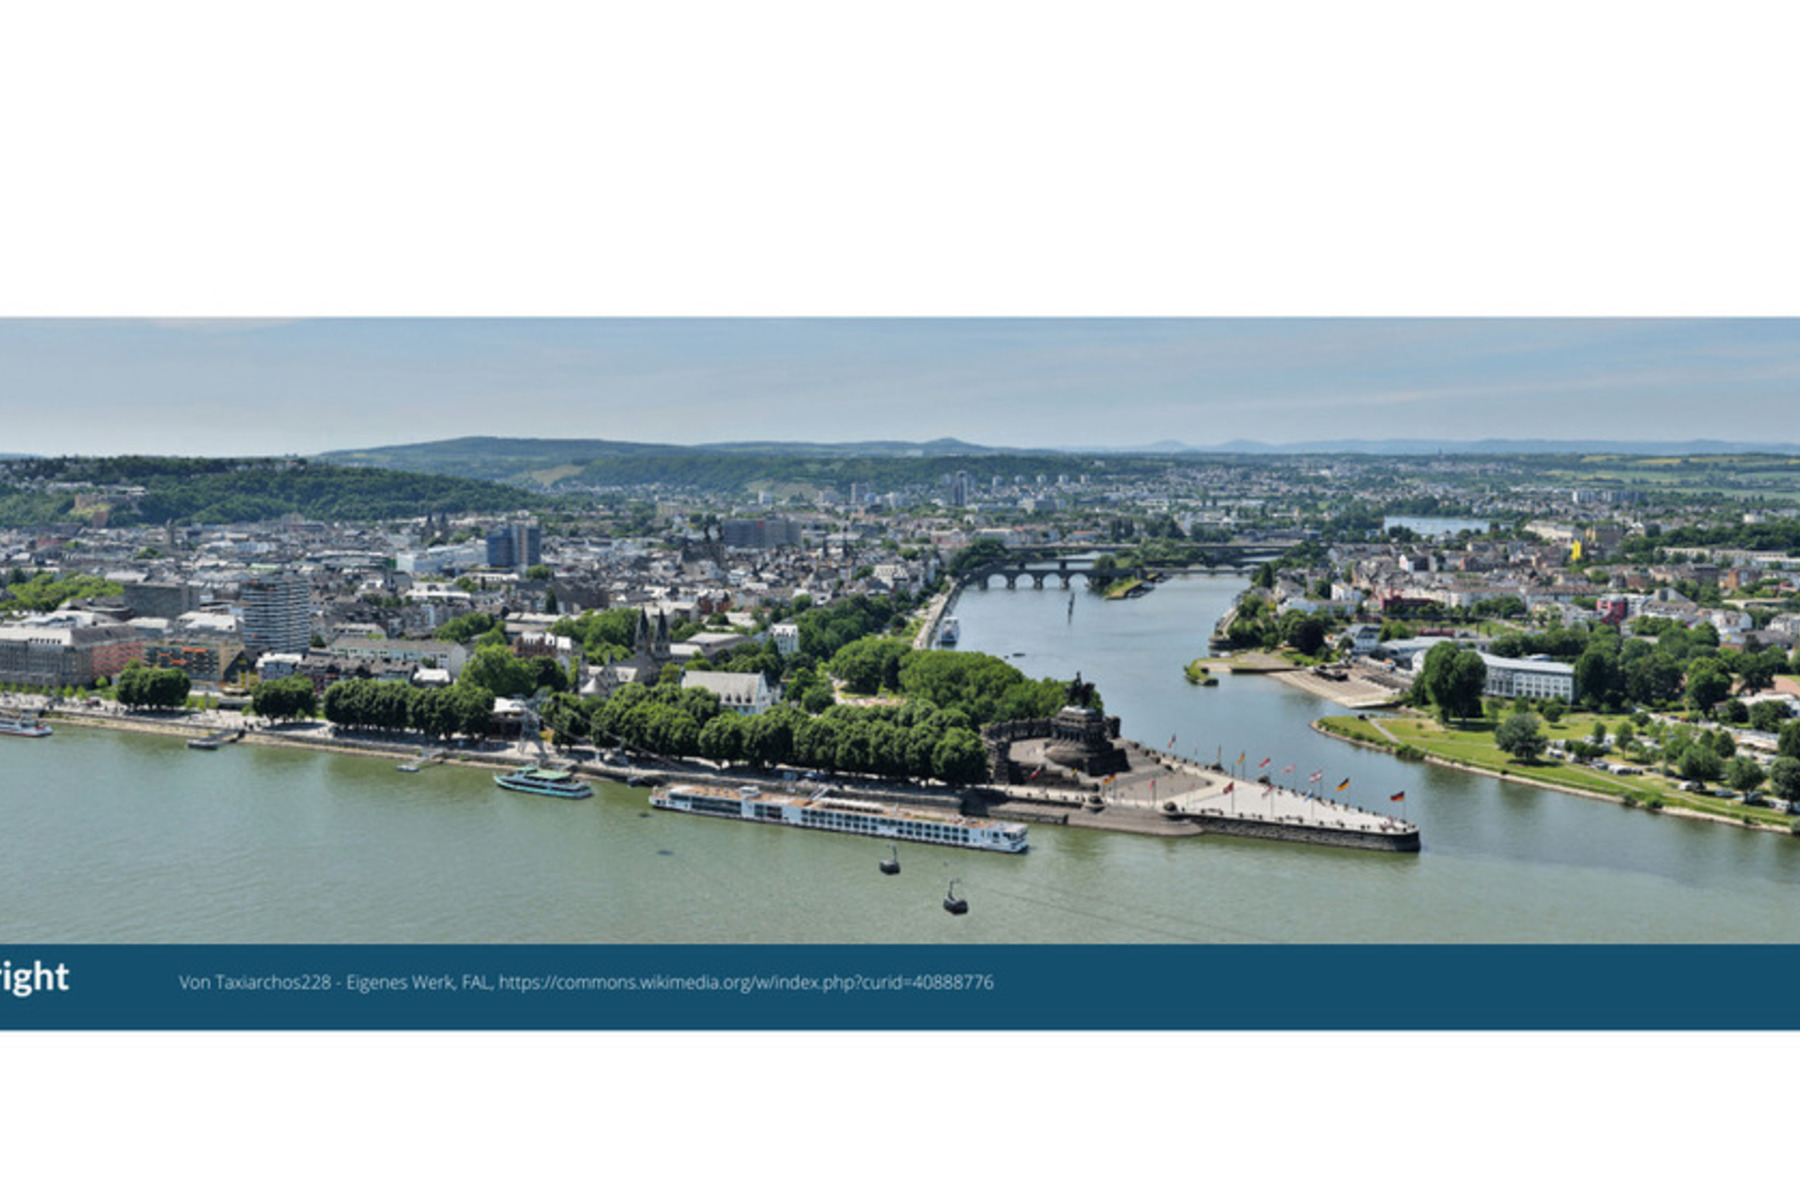 Stadt Koblenz - Public Space